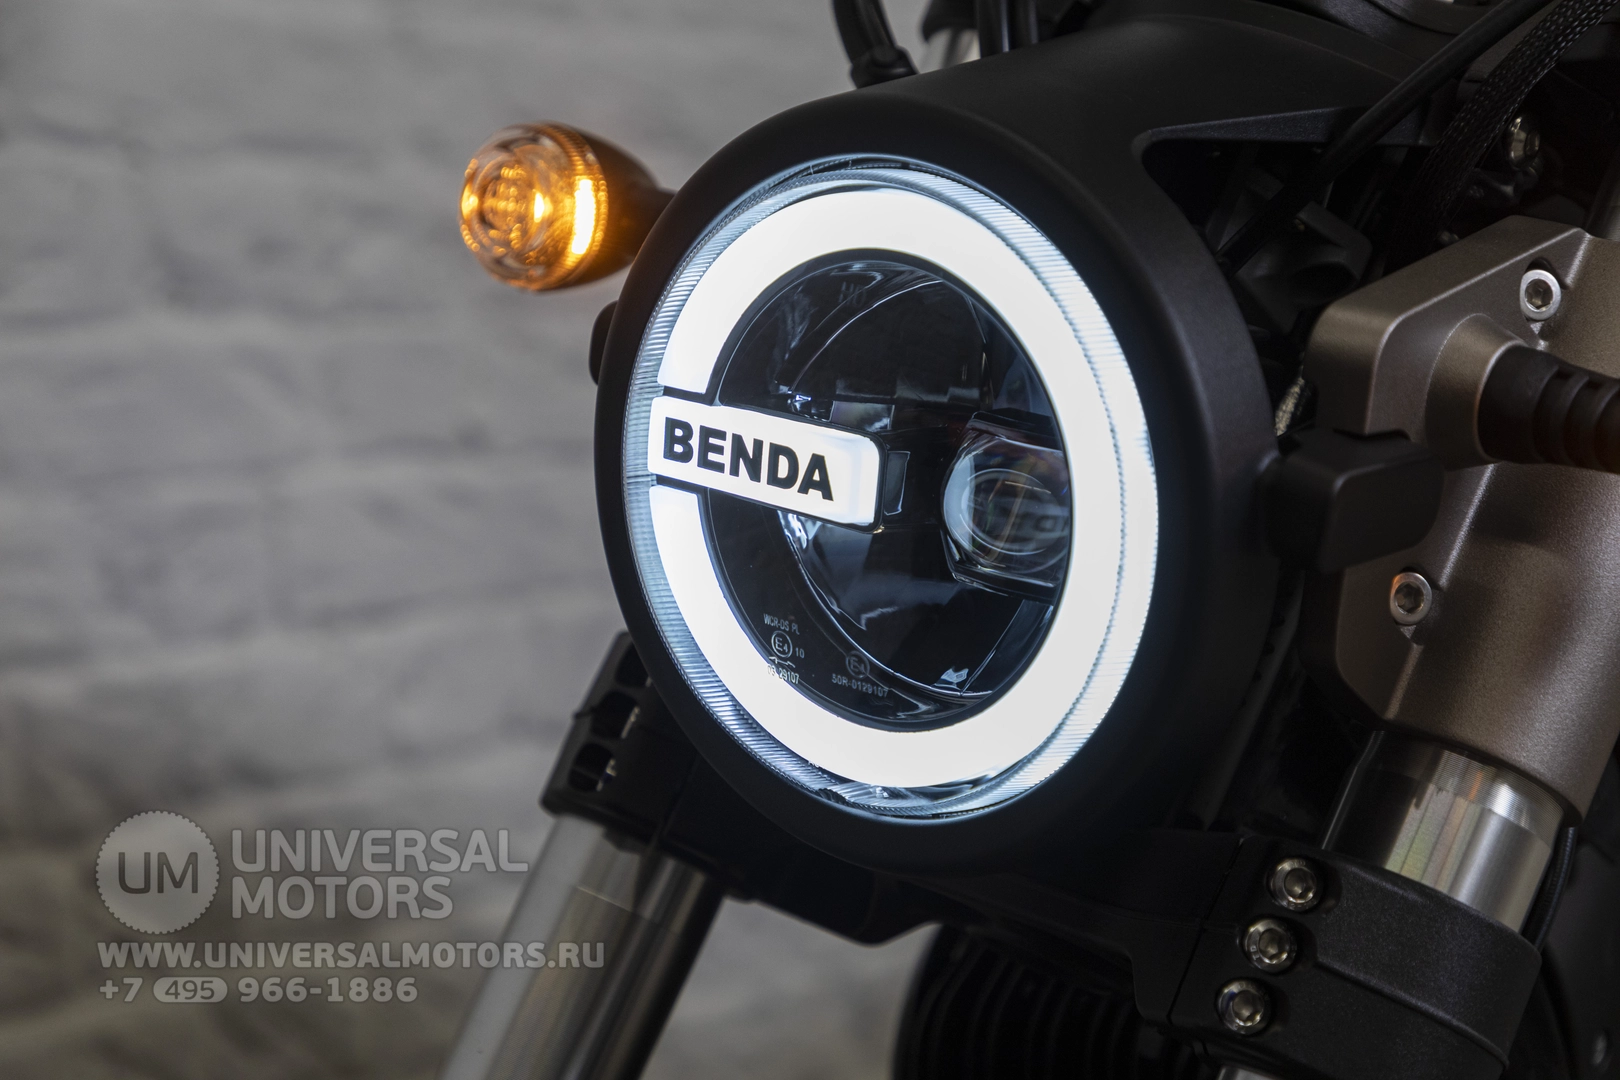 Мотоцикл Benda Rock 300, 23640540494085381770